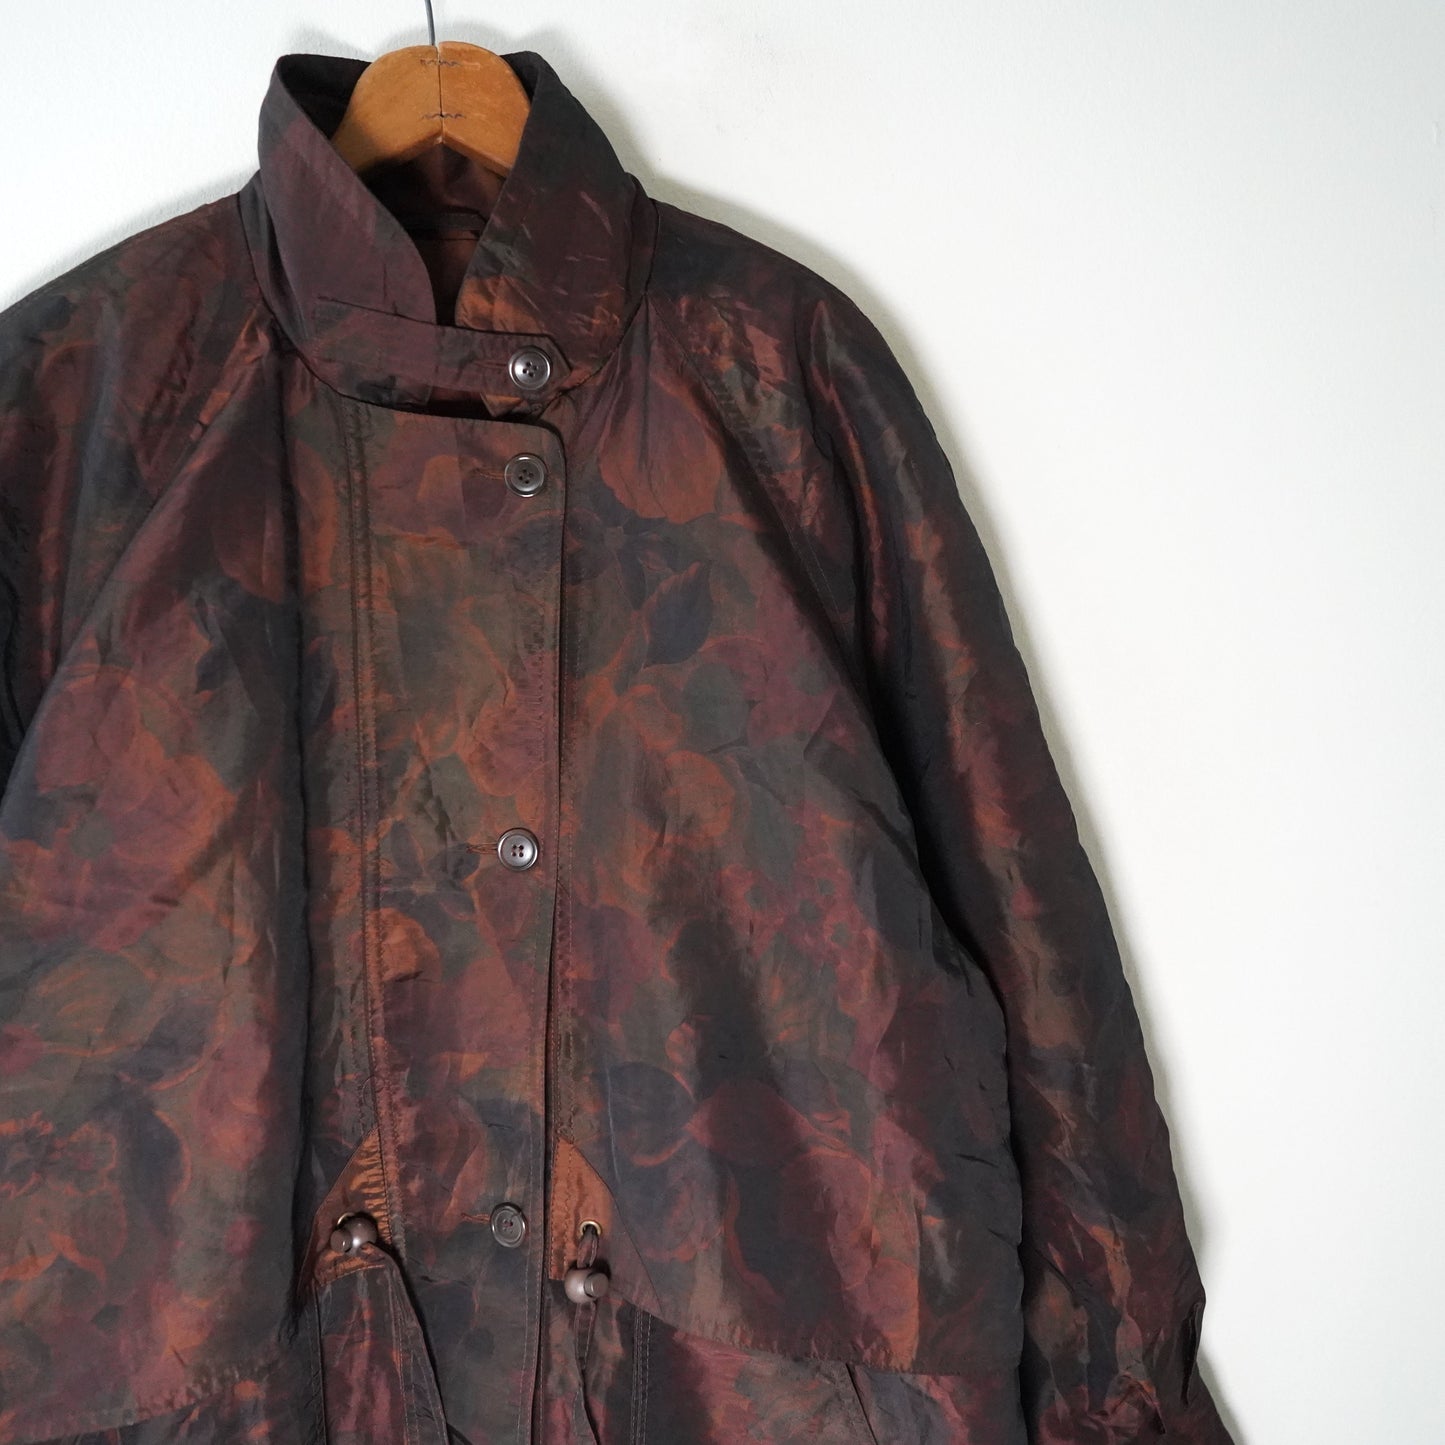 Leaf pattern military jacket